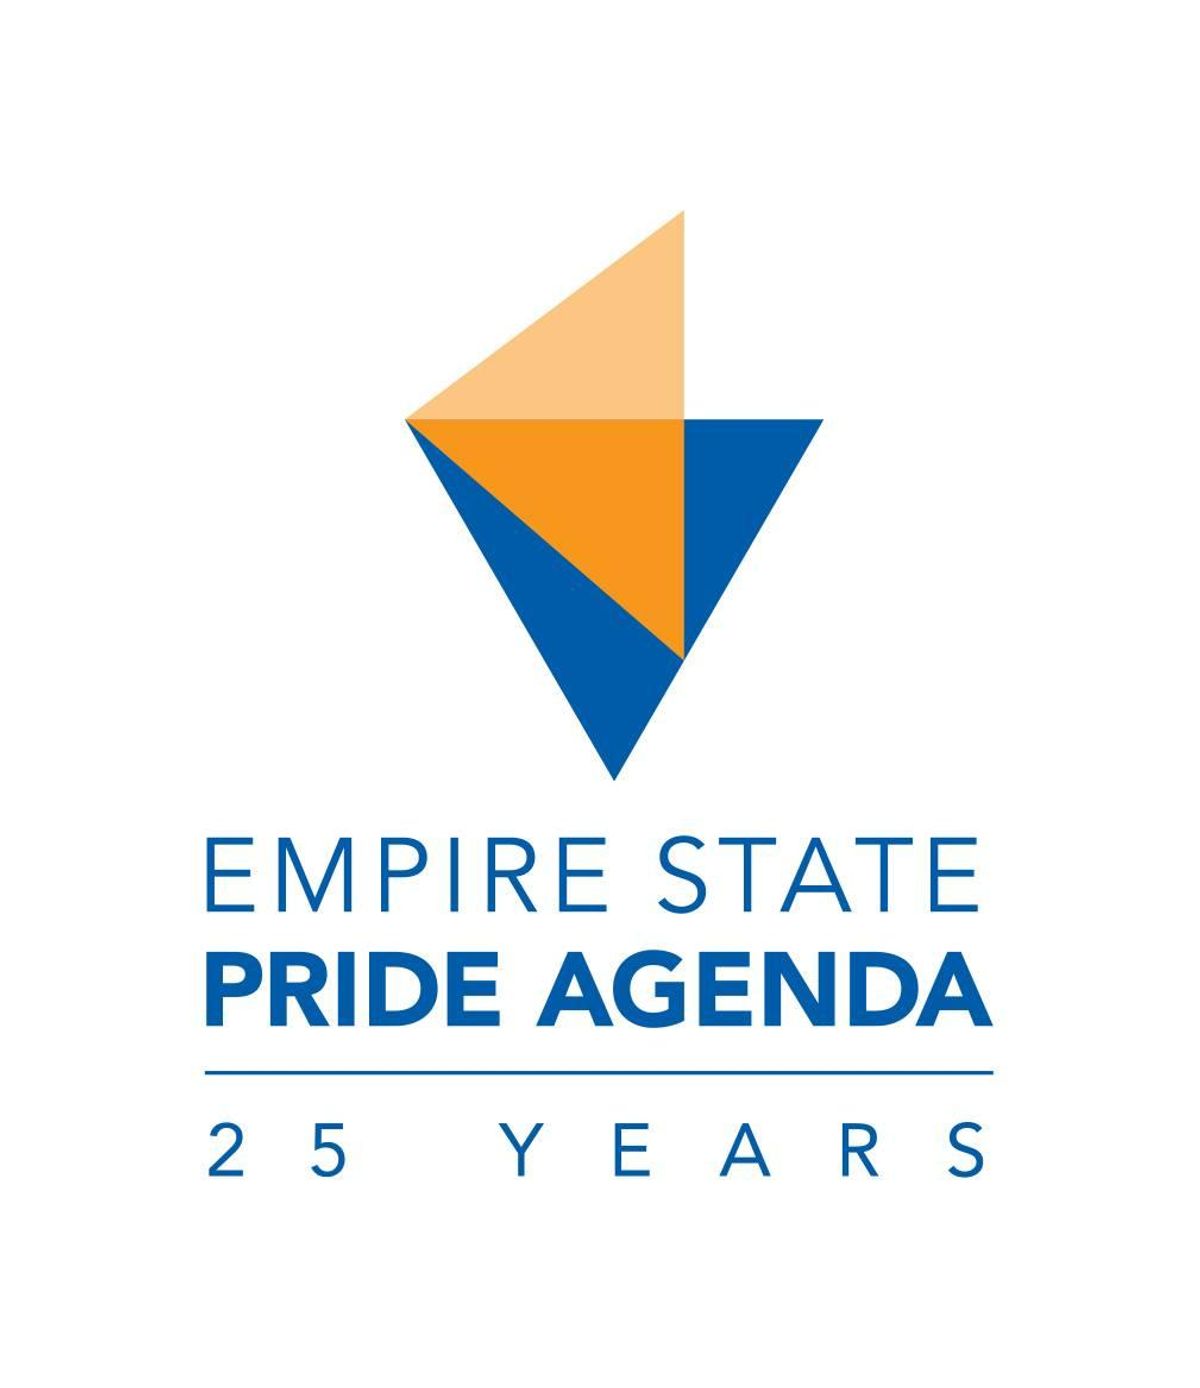 pride agenda logo